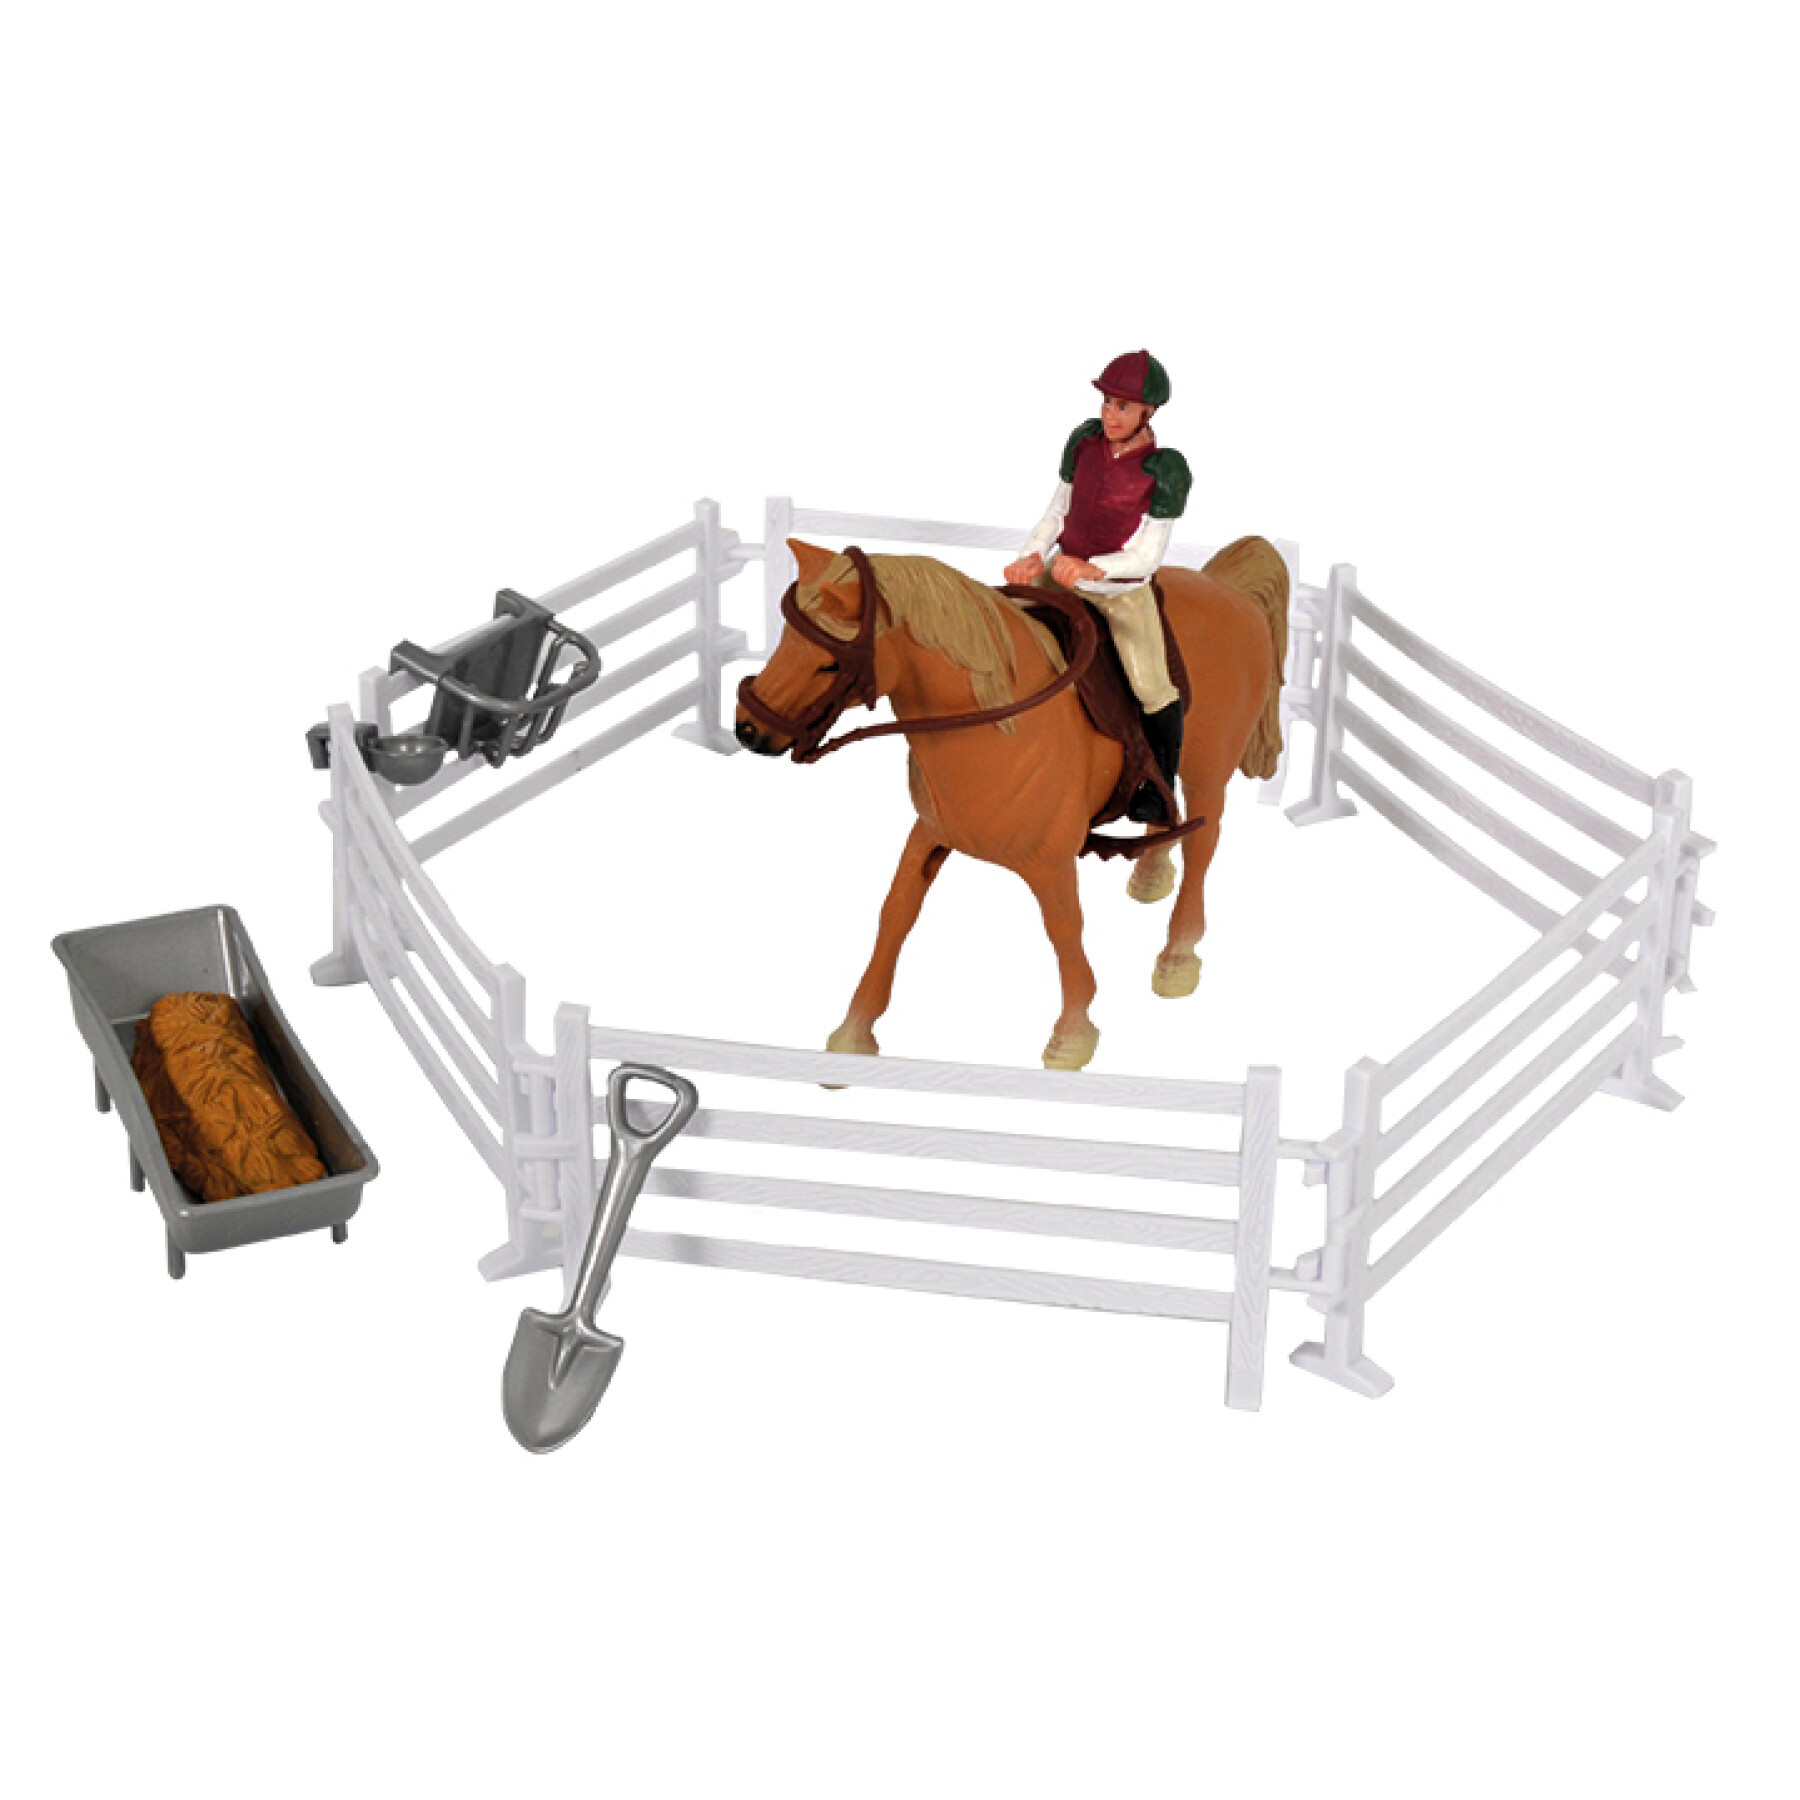 Horse figurine, rider and accessory Kidsglobe